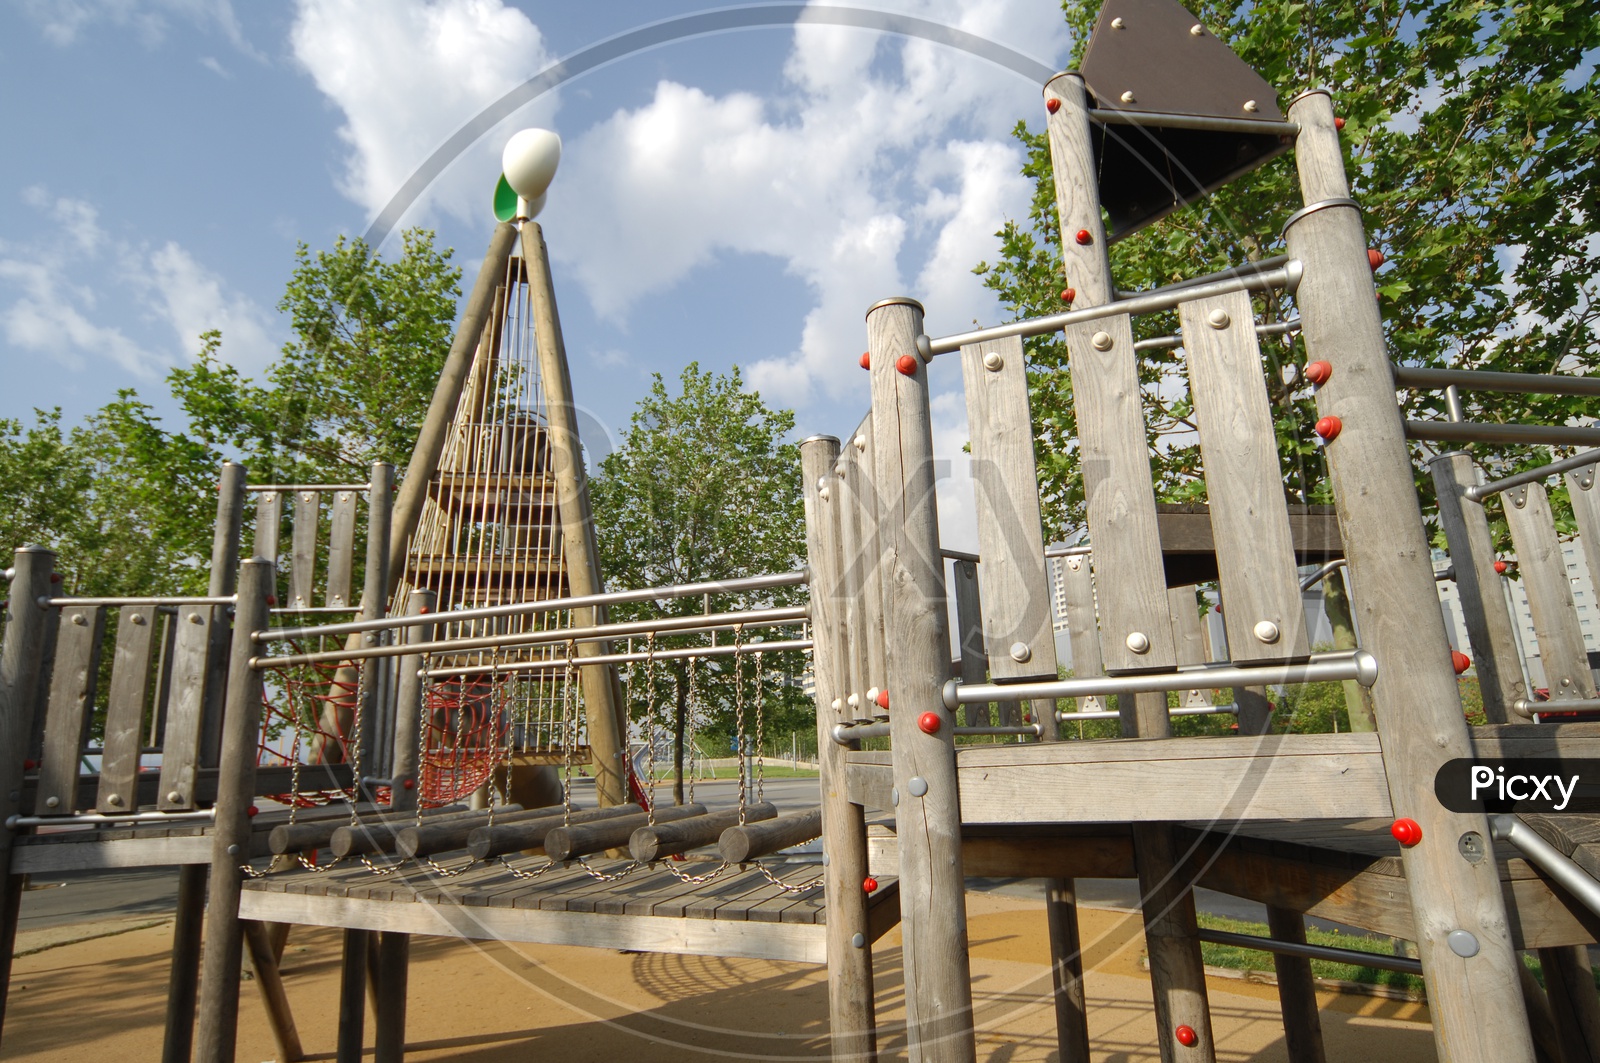 Log bridge in a play area